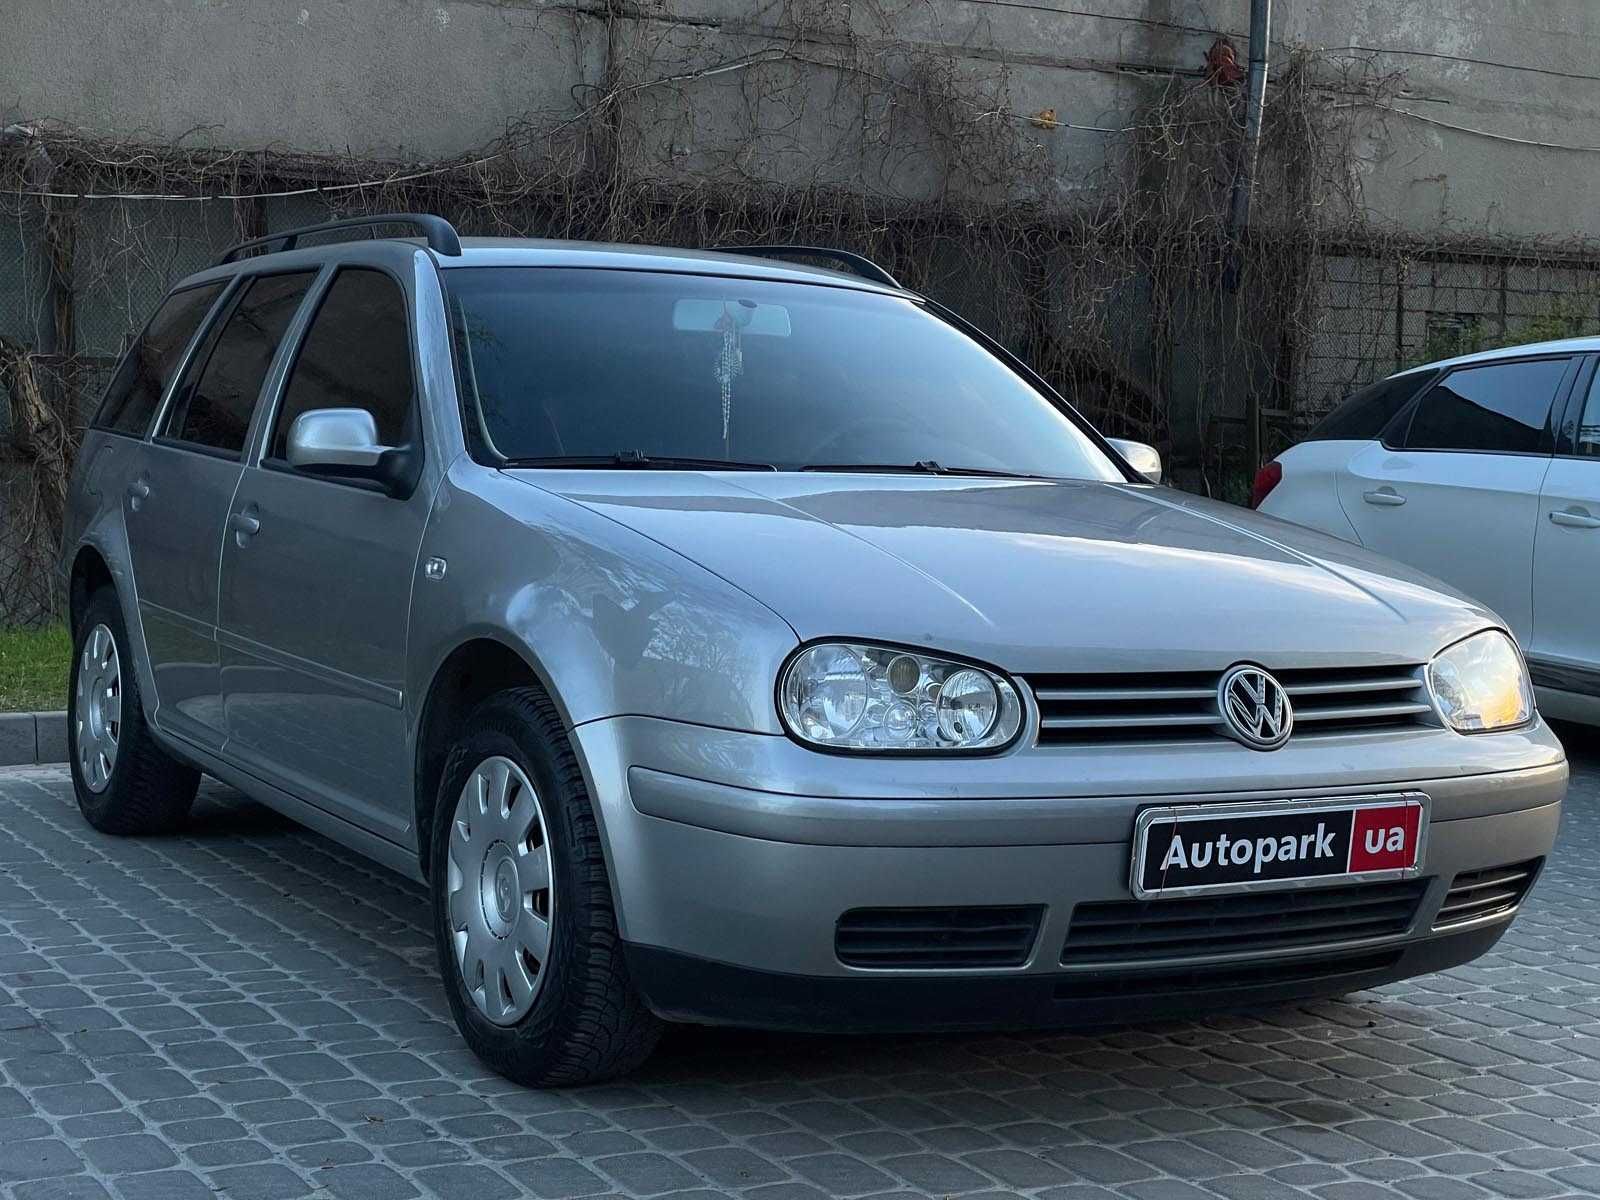 Продам Volkswagen Golf IV 2002р. #43043